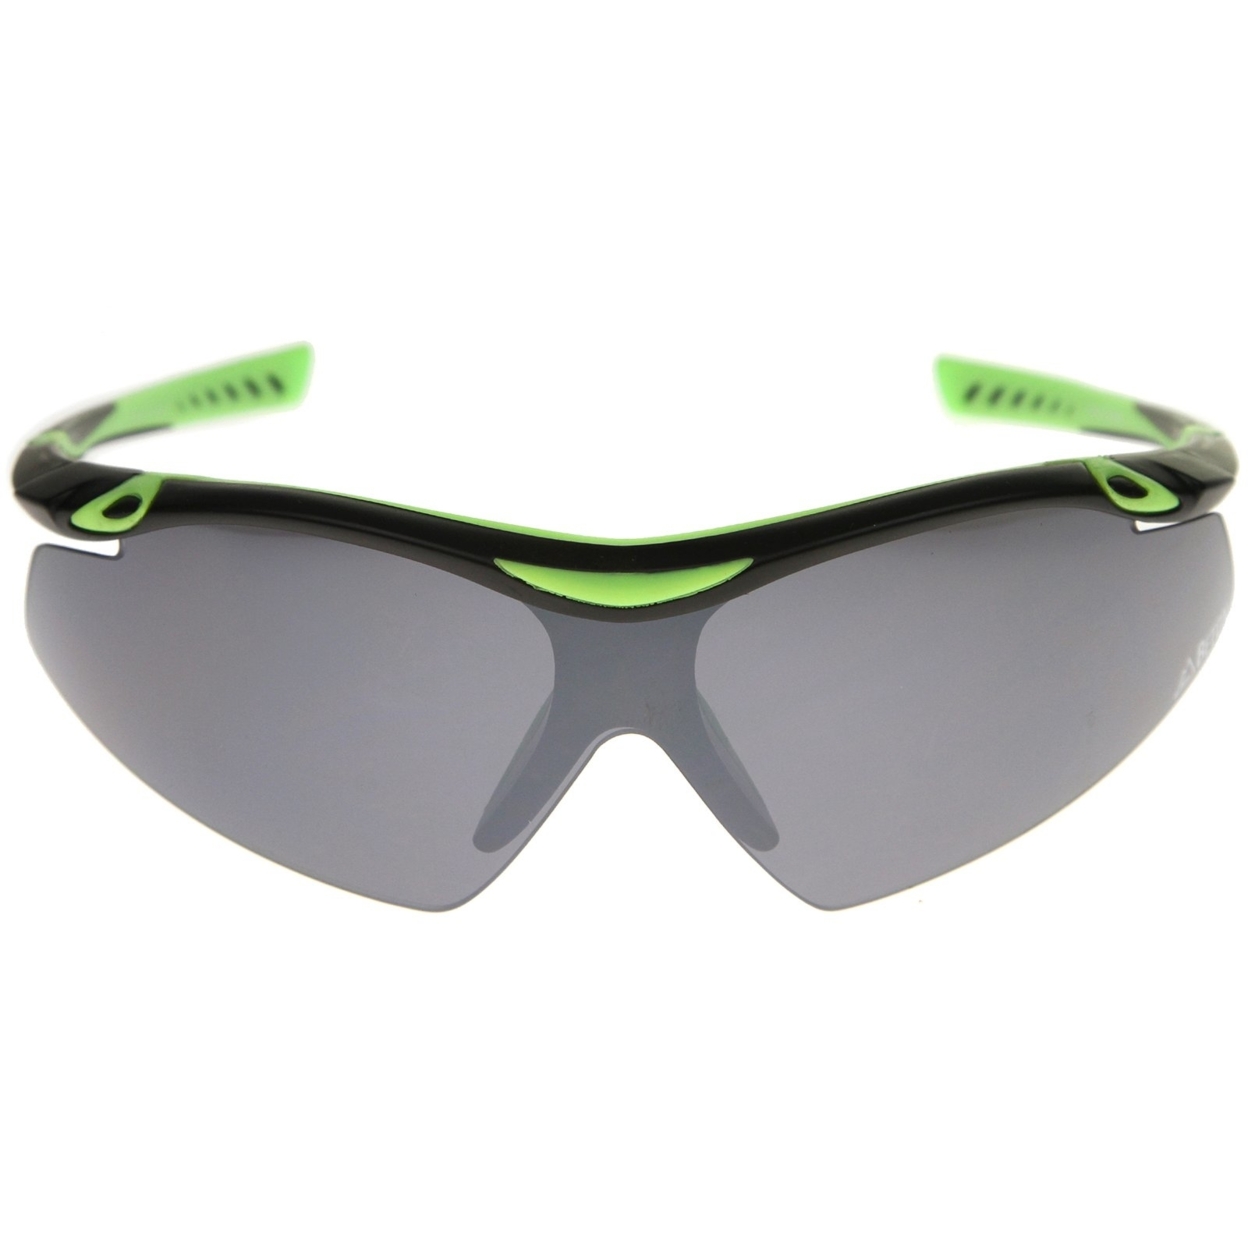 Thor - Half-Frame TR-90 Mirrored Shield Lens Active Sport Wrap Sunglasses 80mm - Matte Black-Green / Smoke